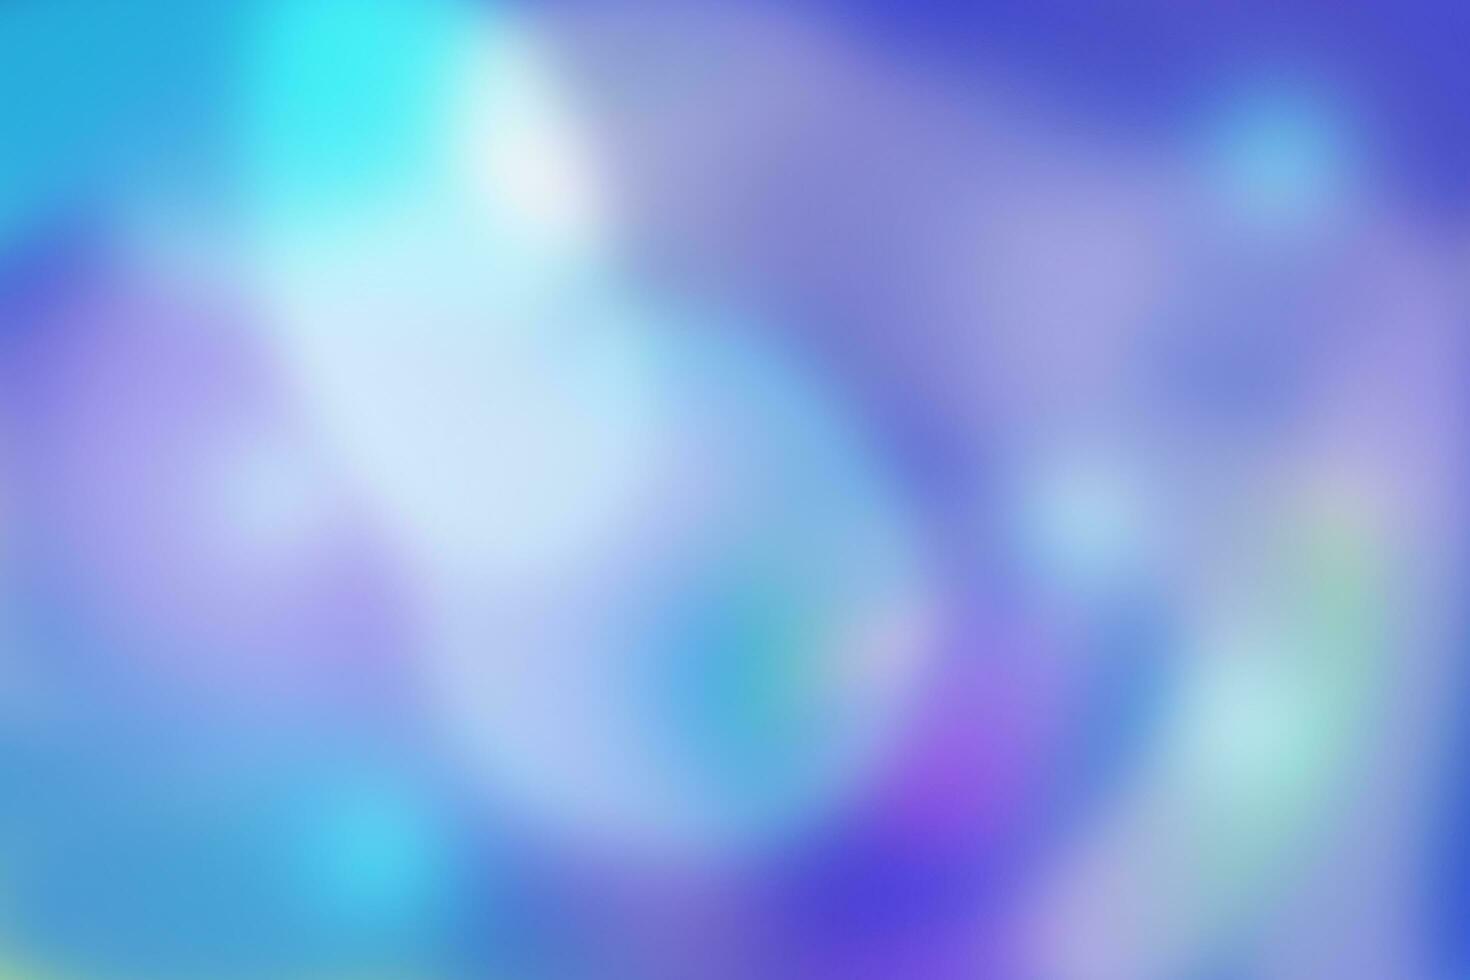 abstract levendig zacht pastel blauw en Purper achtergrond met zacht schittering vervaagd licht foto